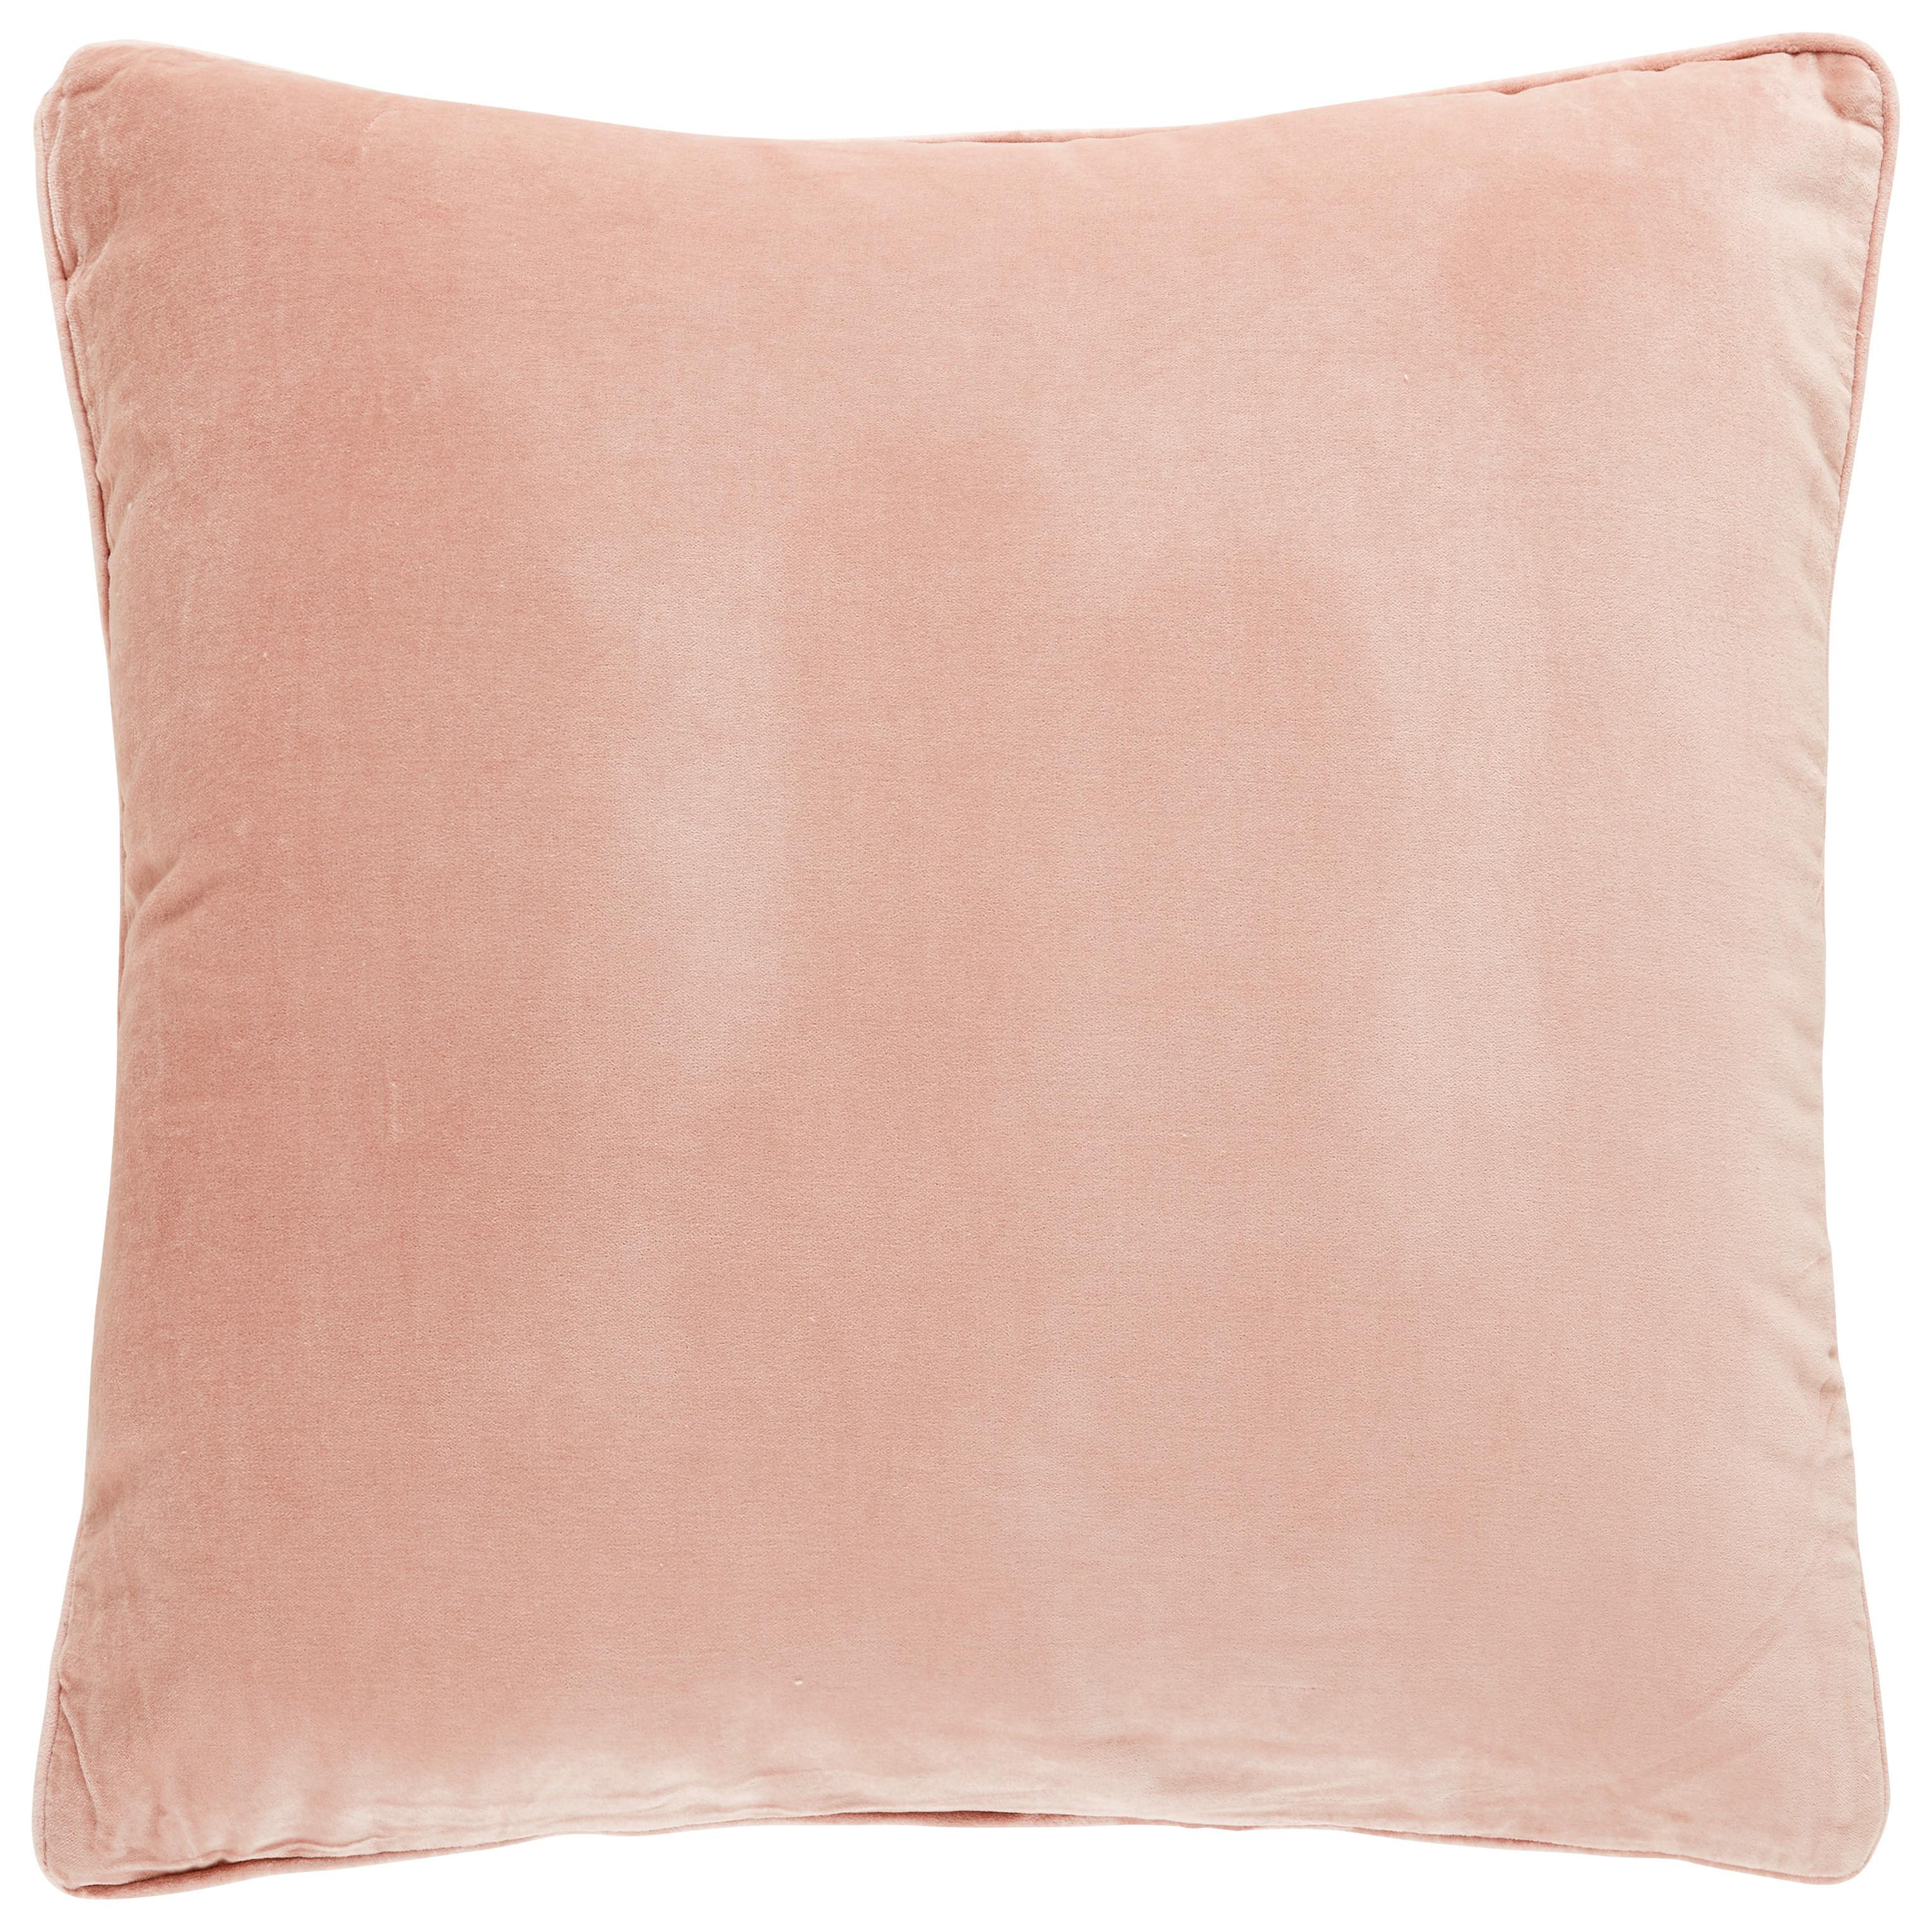 Polštář Ozdobný Susan, 60/60cm, Růžová - růžová, textil (60/60cm) - Modern Living